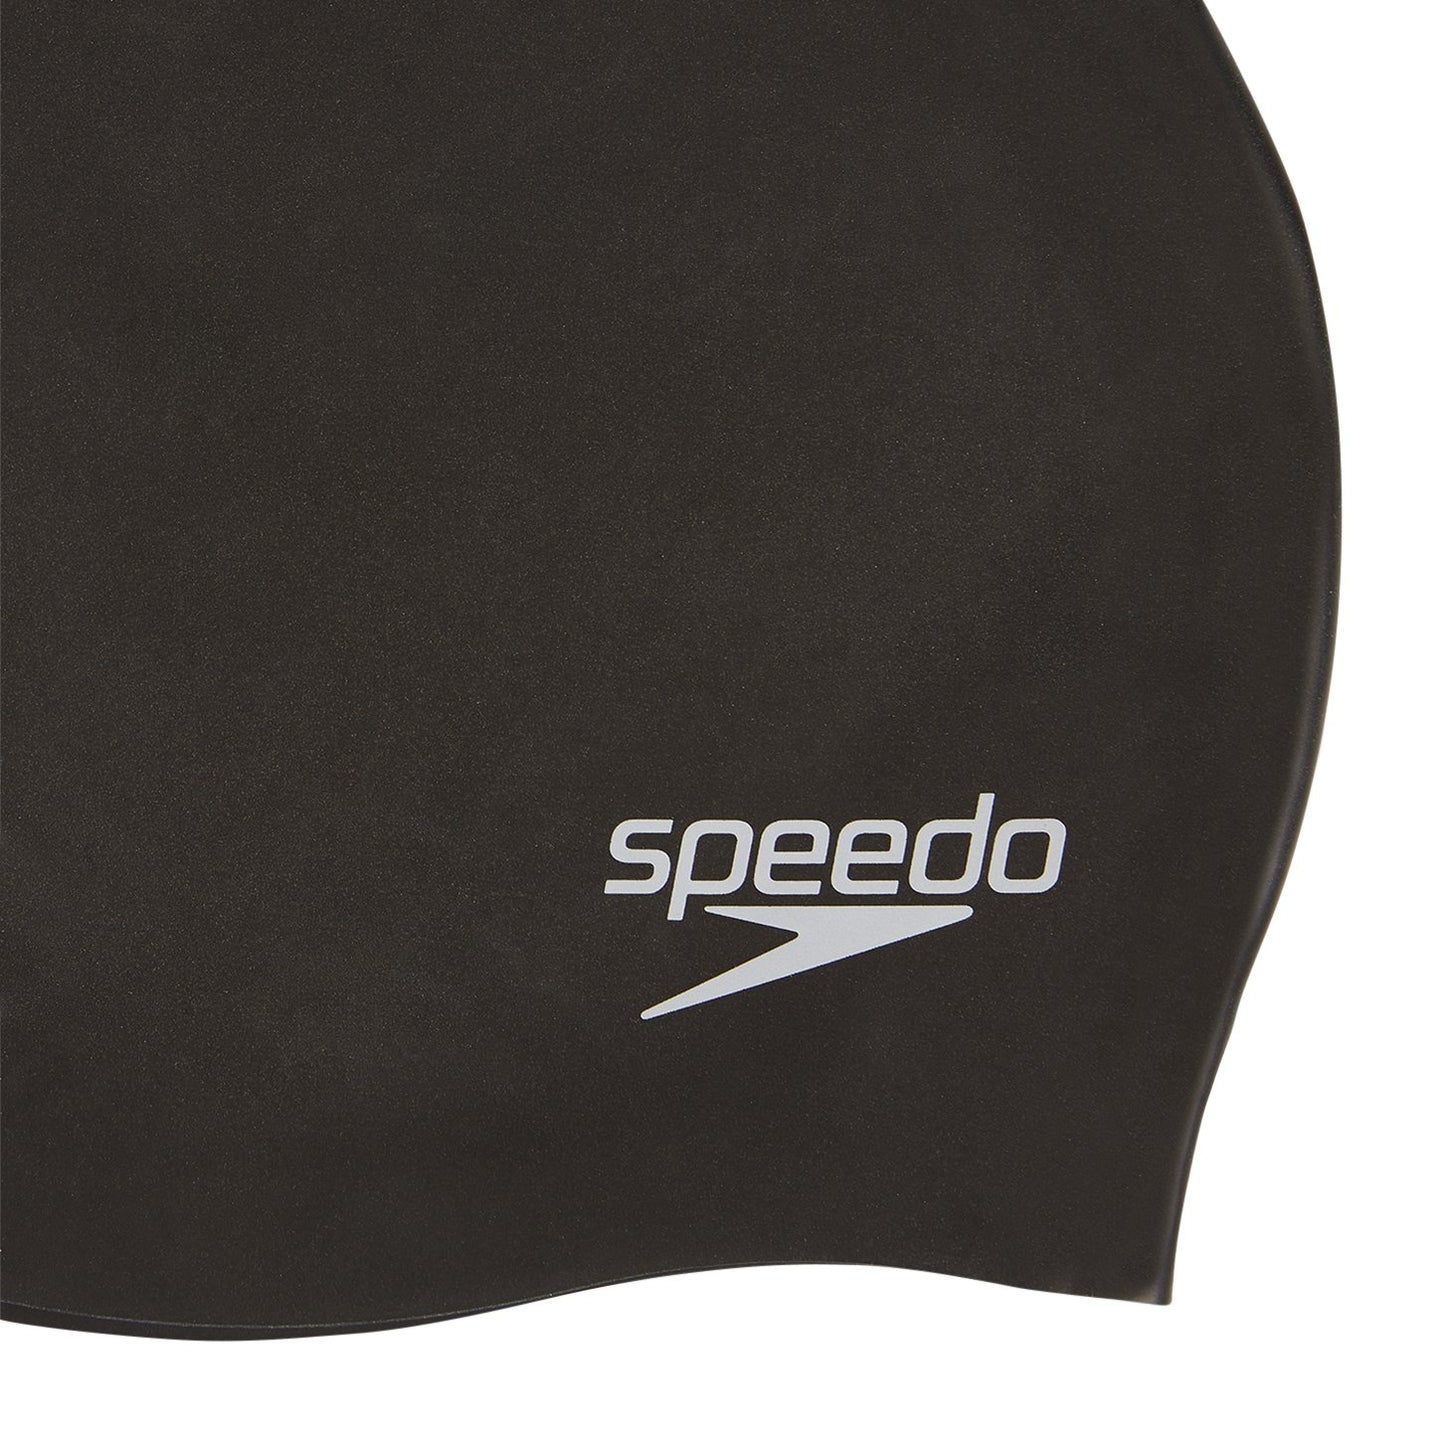 Speedo Plain Moulded Silicone Swimming Cap, Free Size (Black/Gold) - Best Price online Prokicksports.com